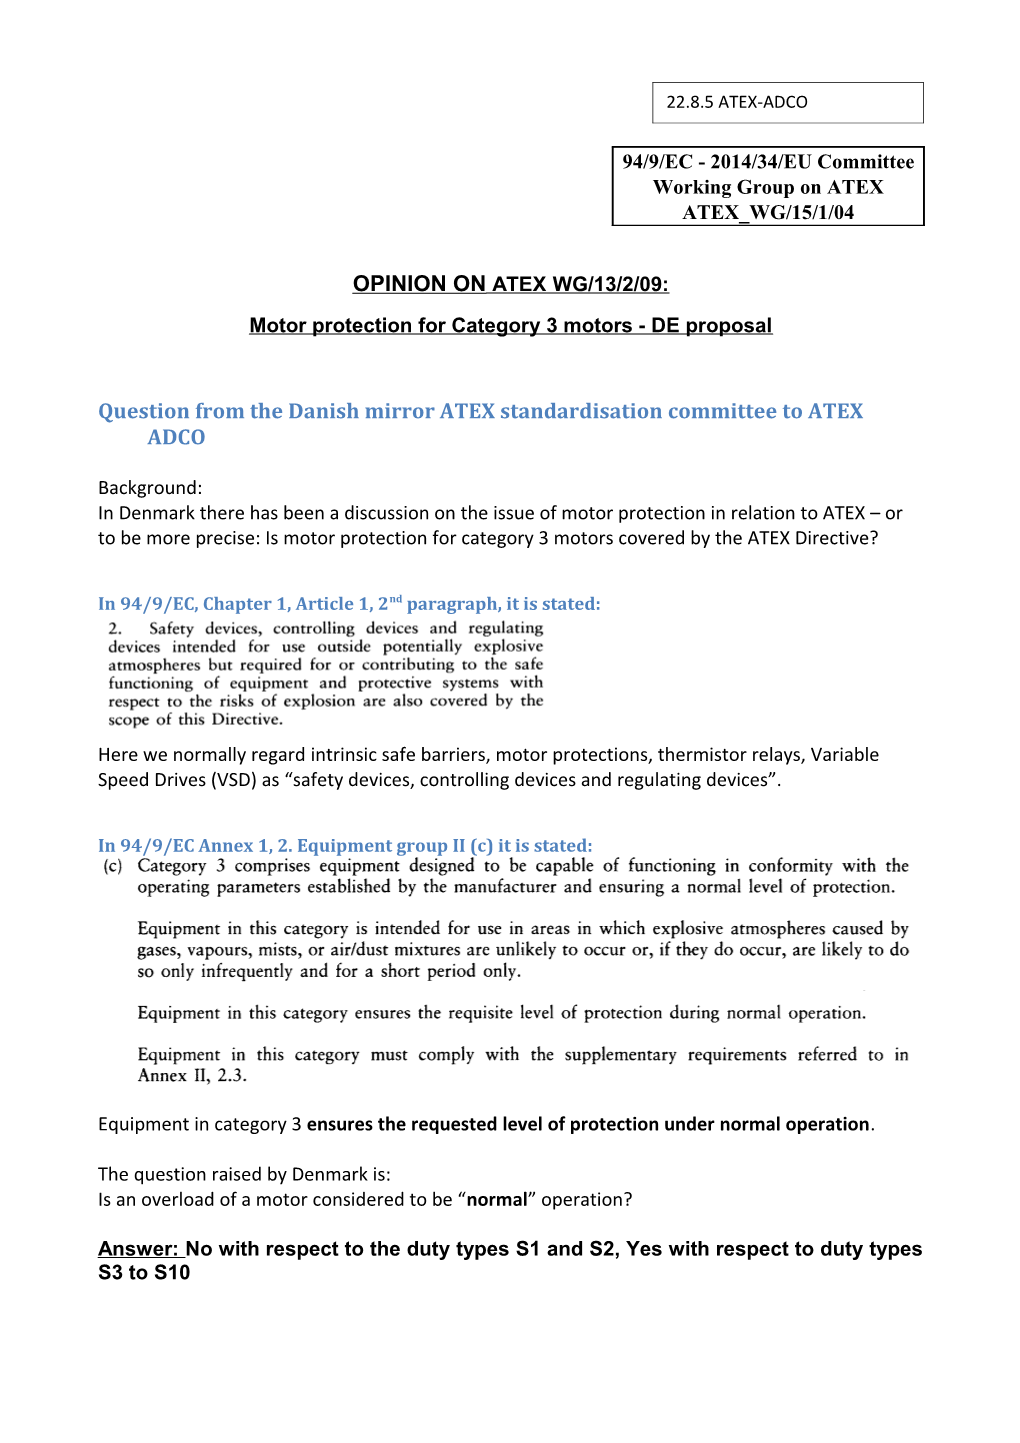 ATEX WG/15/1/04 - Motor Protection for Category 3 Motors - DE Proposal